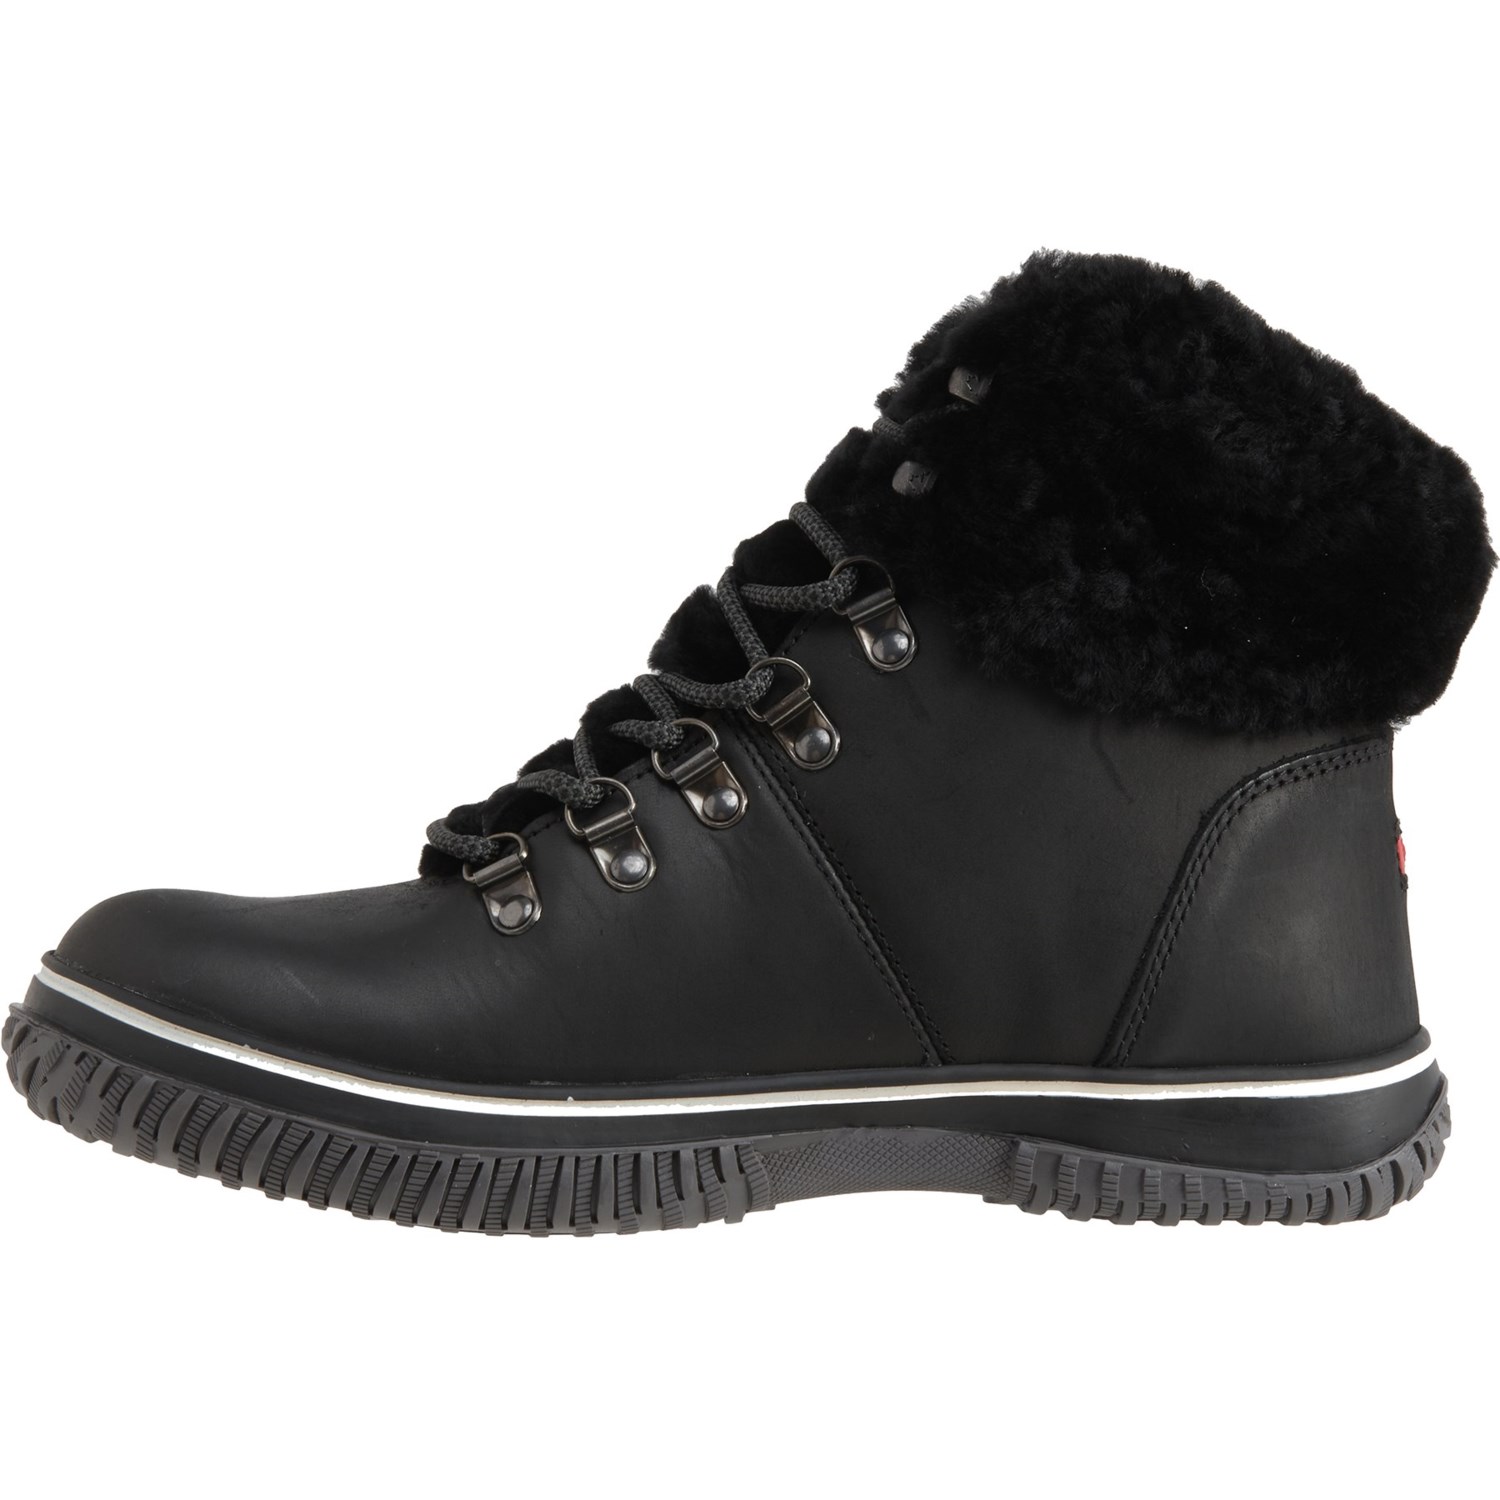 Pajar Galat Shearling Winter Boots (For Women) - Save 40%